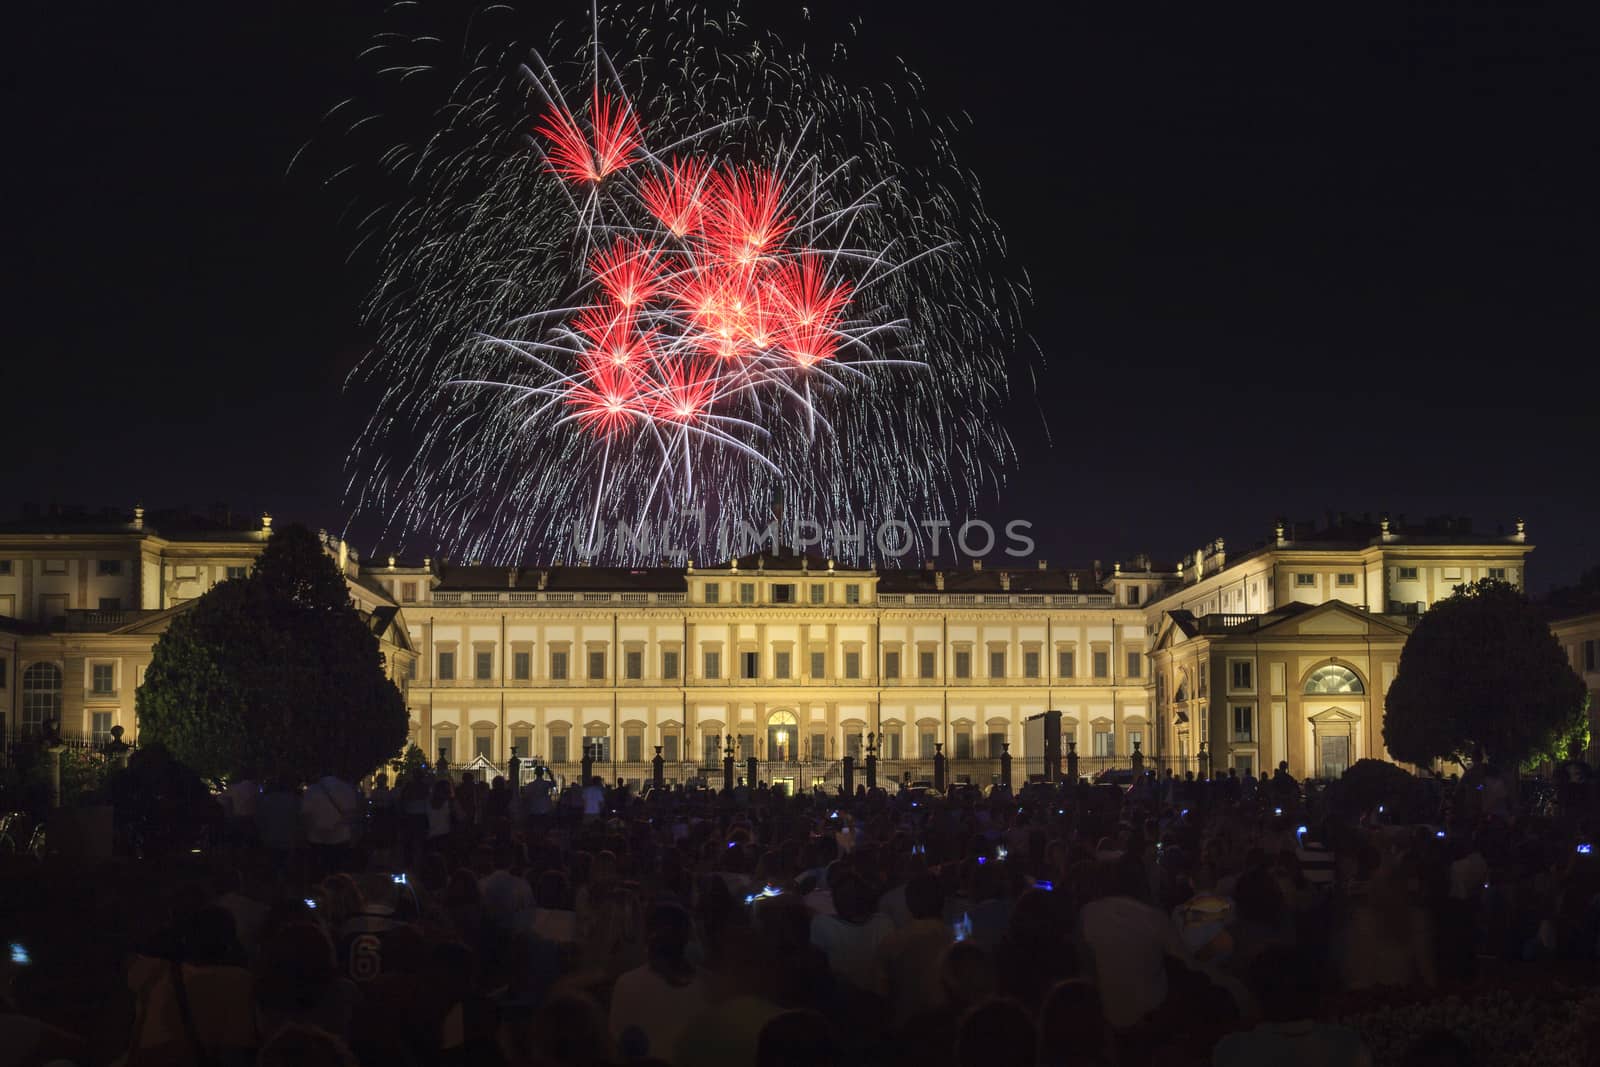 Fireworks on the historic Villa Reale for Saint John feast, Monza, Italy